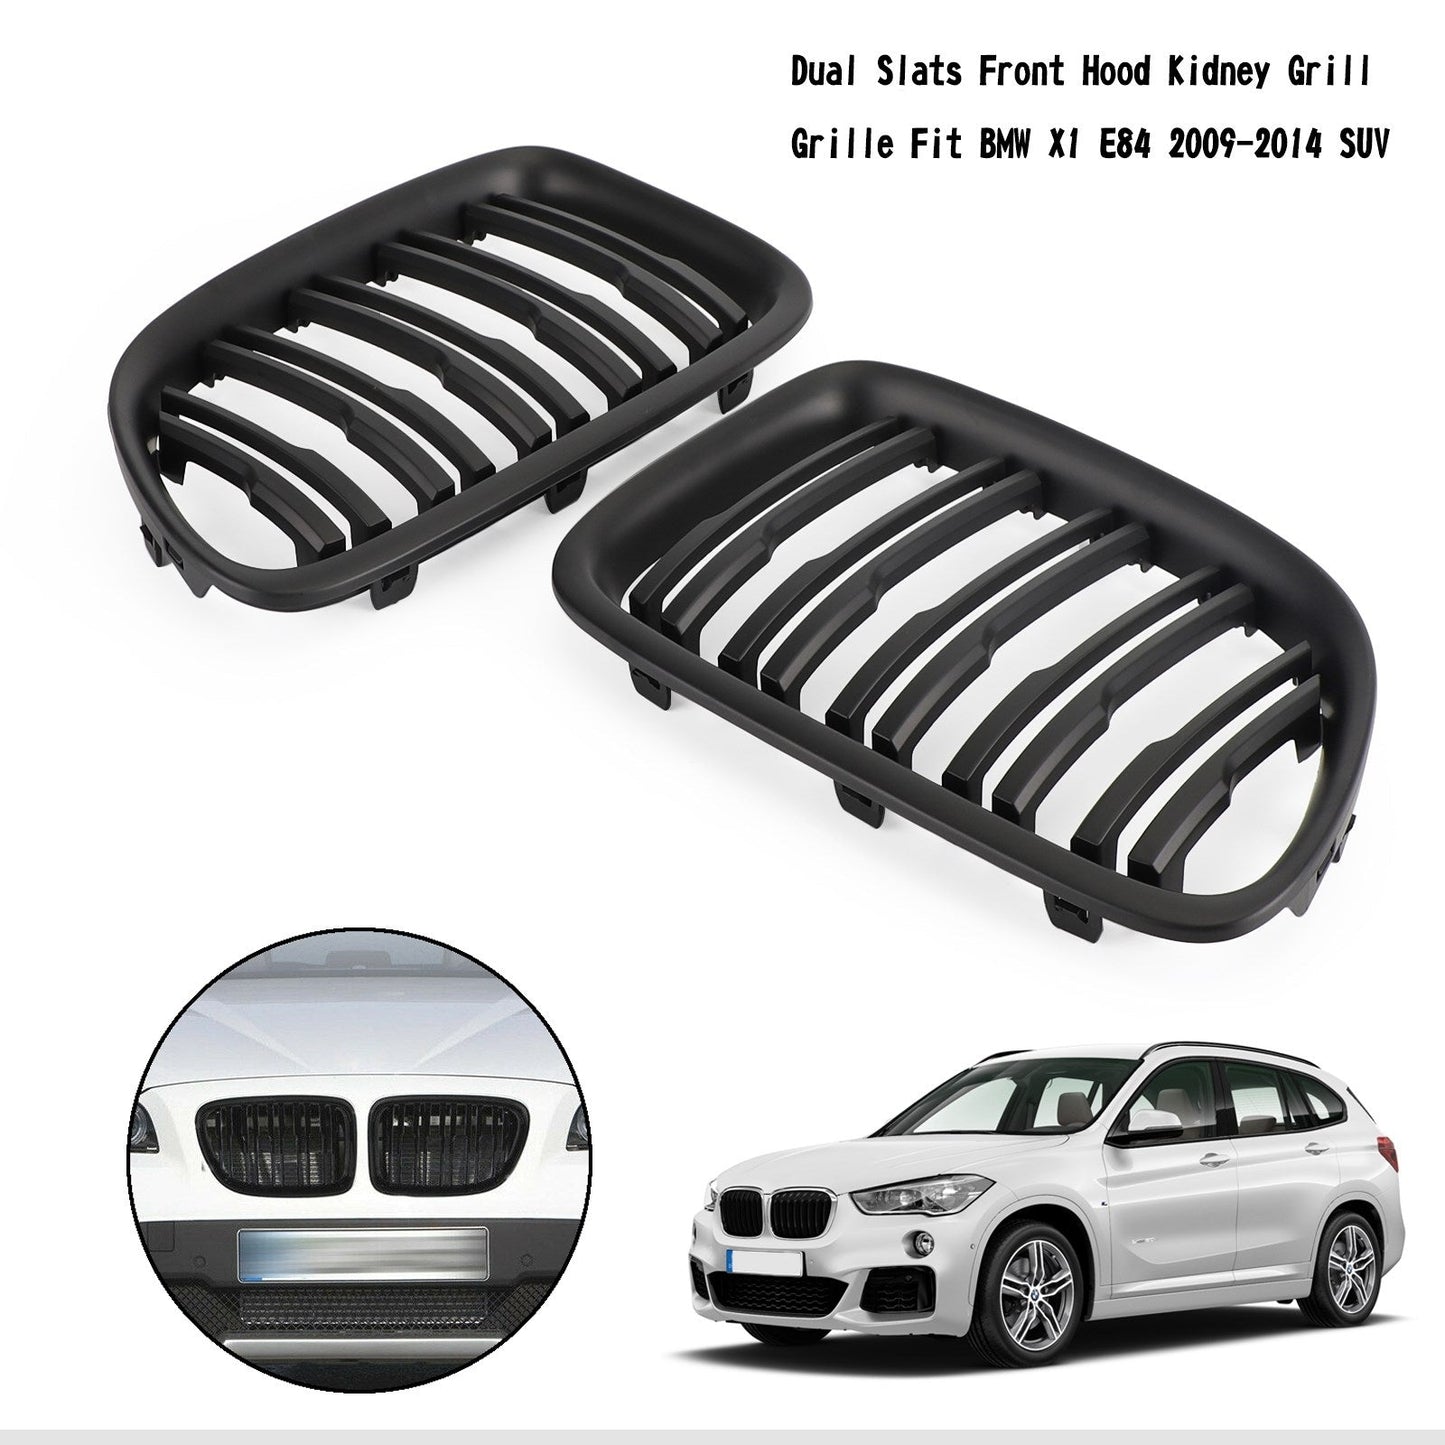 2009-2014 BMW X1 E84 SUV Matt Black Dual Slats Front Hood Kidney Grill Grille